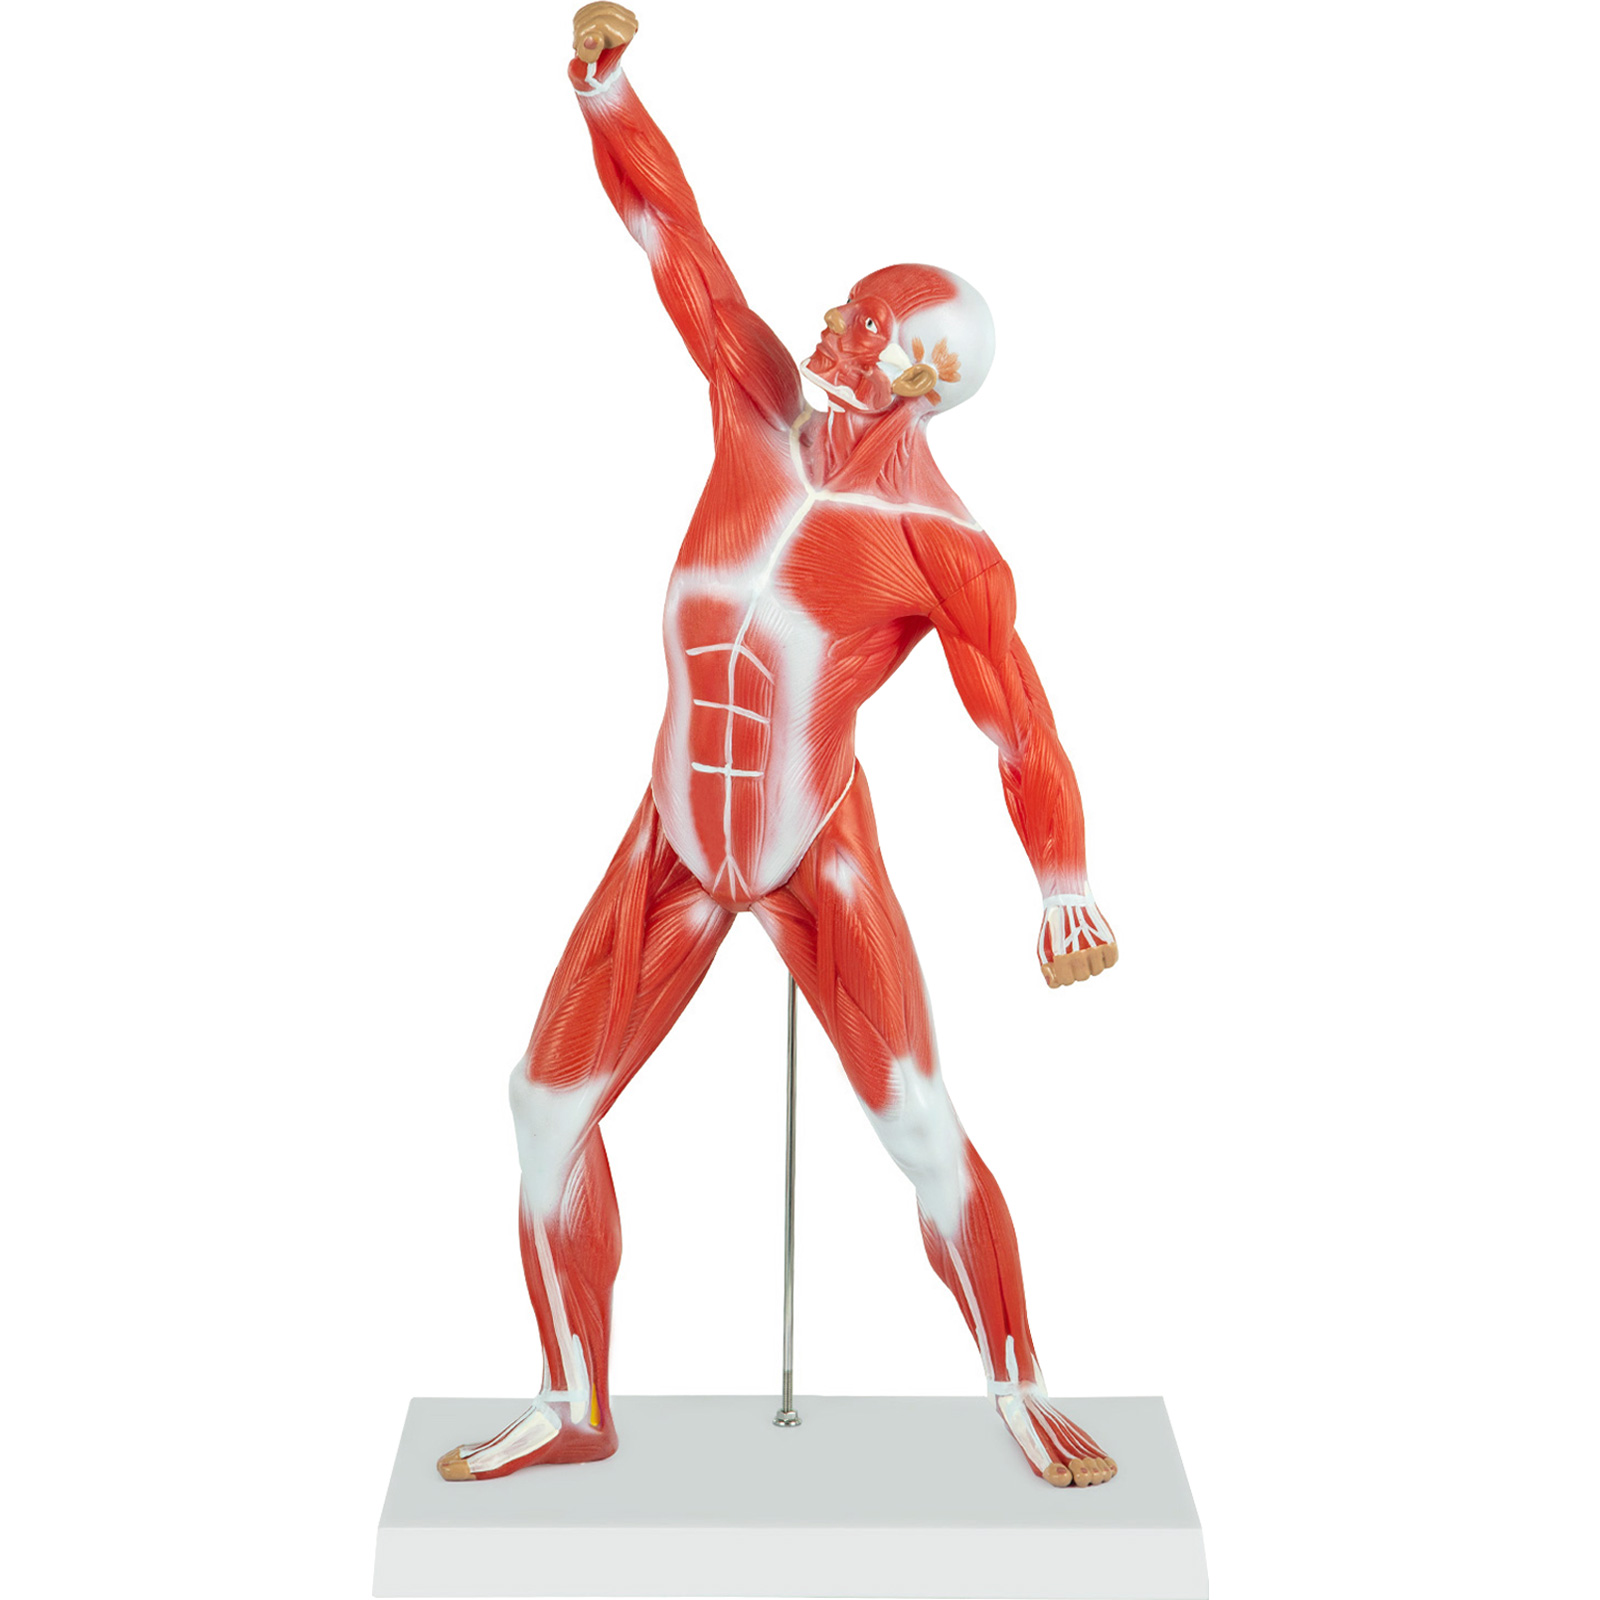 Vevor Anatomical Human Muscular Model Muscle Anatomy Model 20" Mini Muscle Model от Vevor Many GEOs